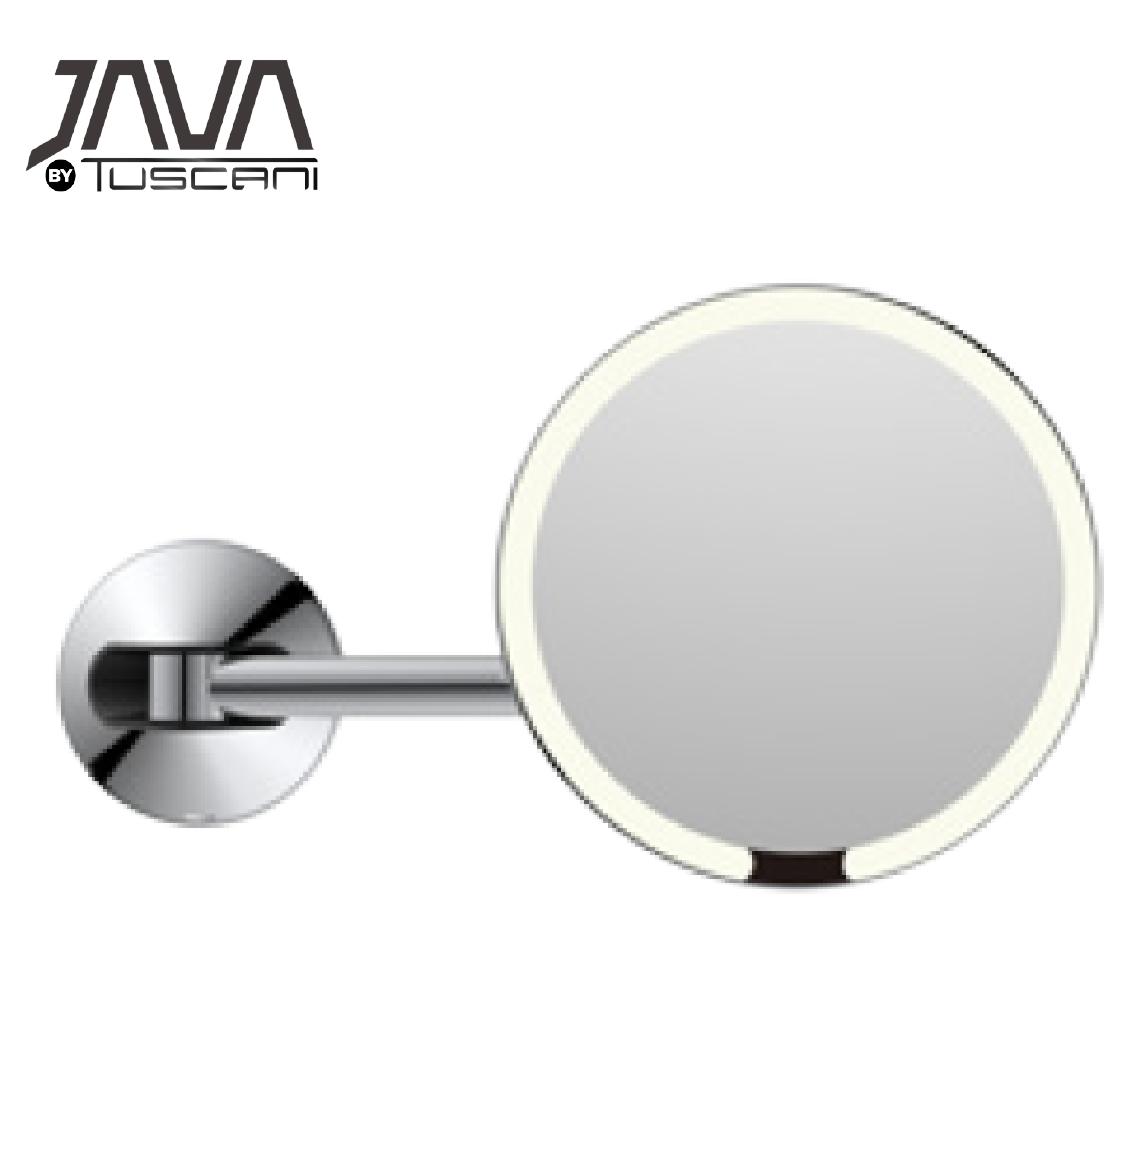 Tuscani JAVA TJ-M8881 Wall Hung Design Makeup Mirror